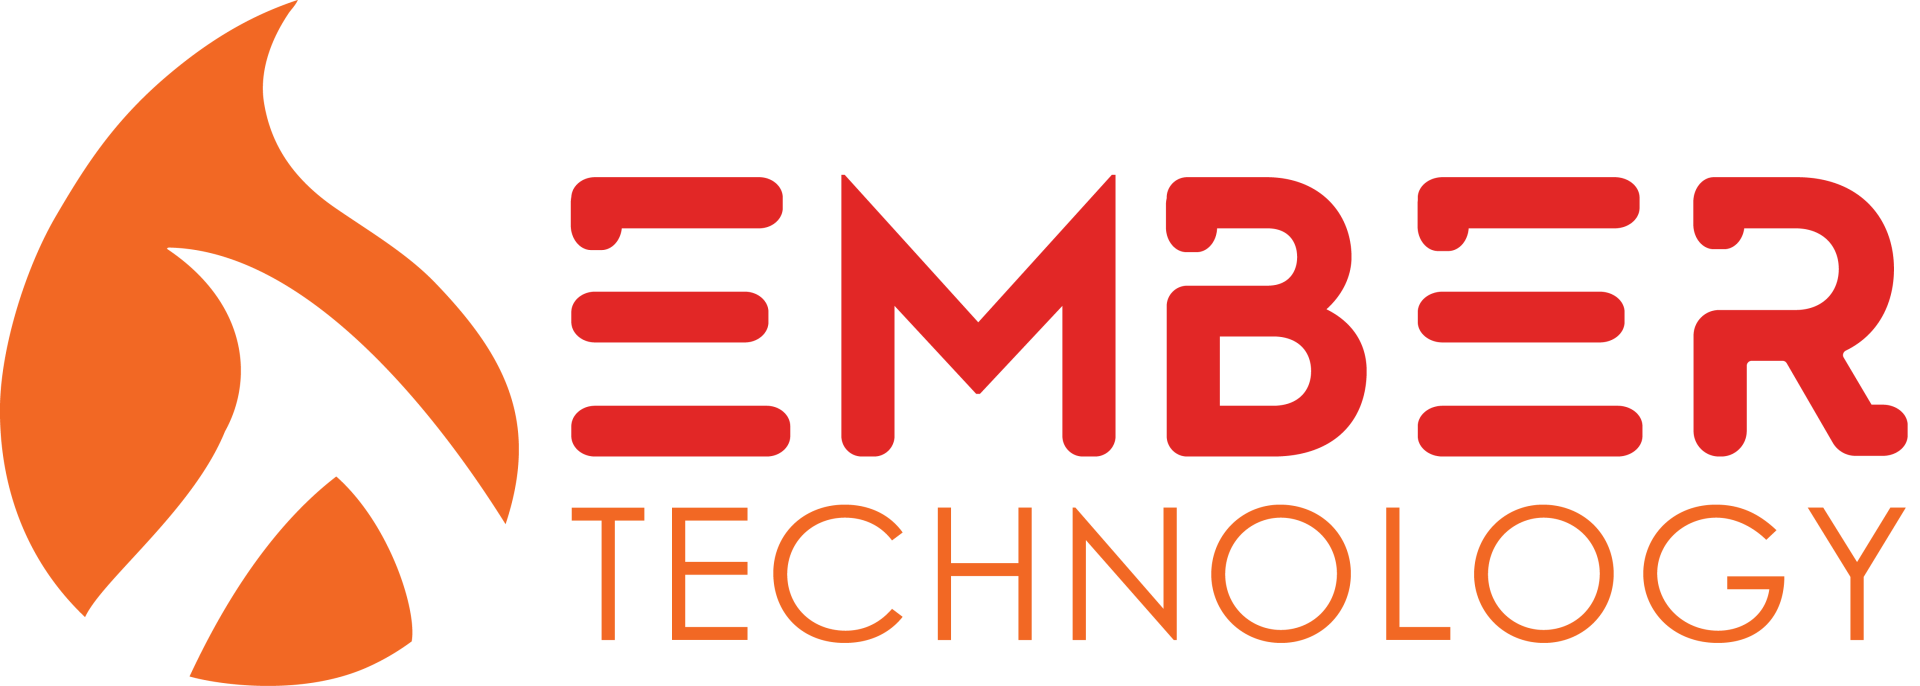 Ember Technology - CMMC made simple